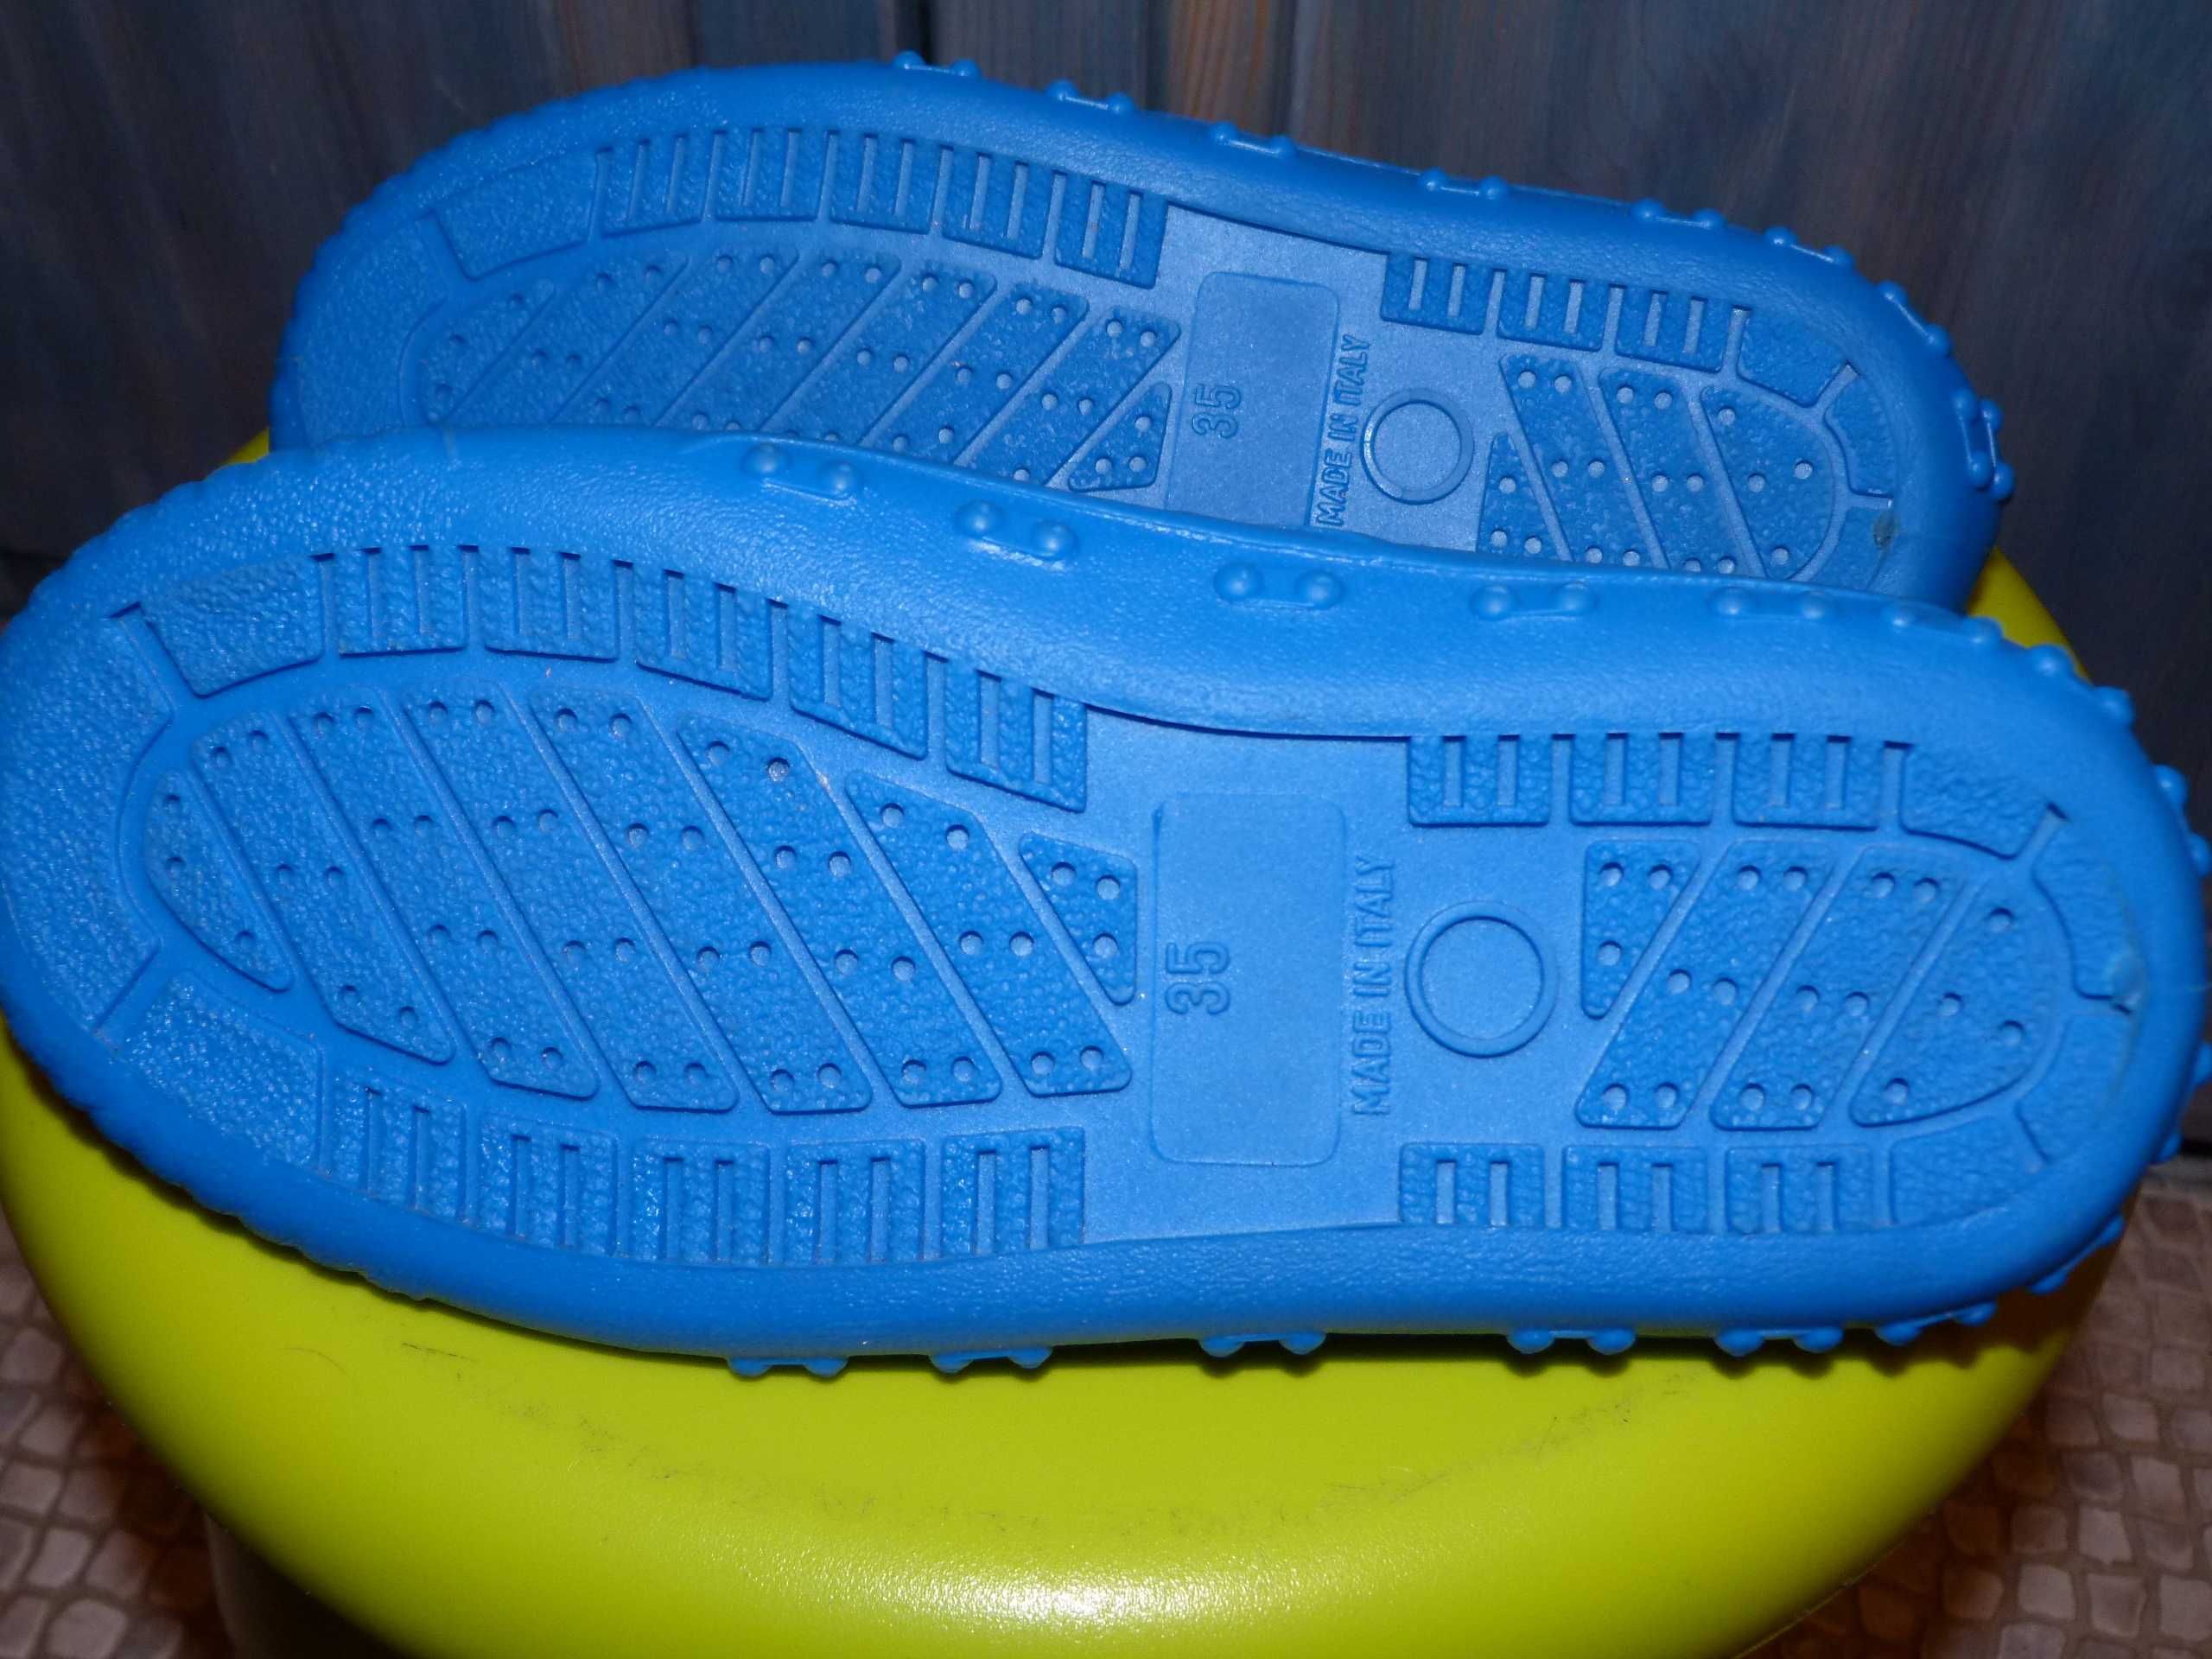 SANITIZED-buty do wody,na basen,wodny aerobik r.35